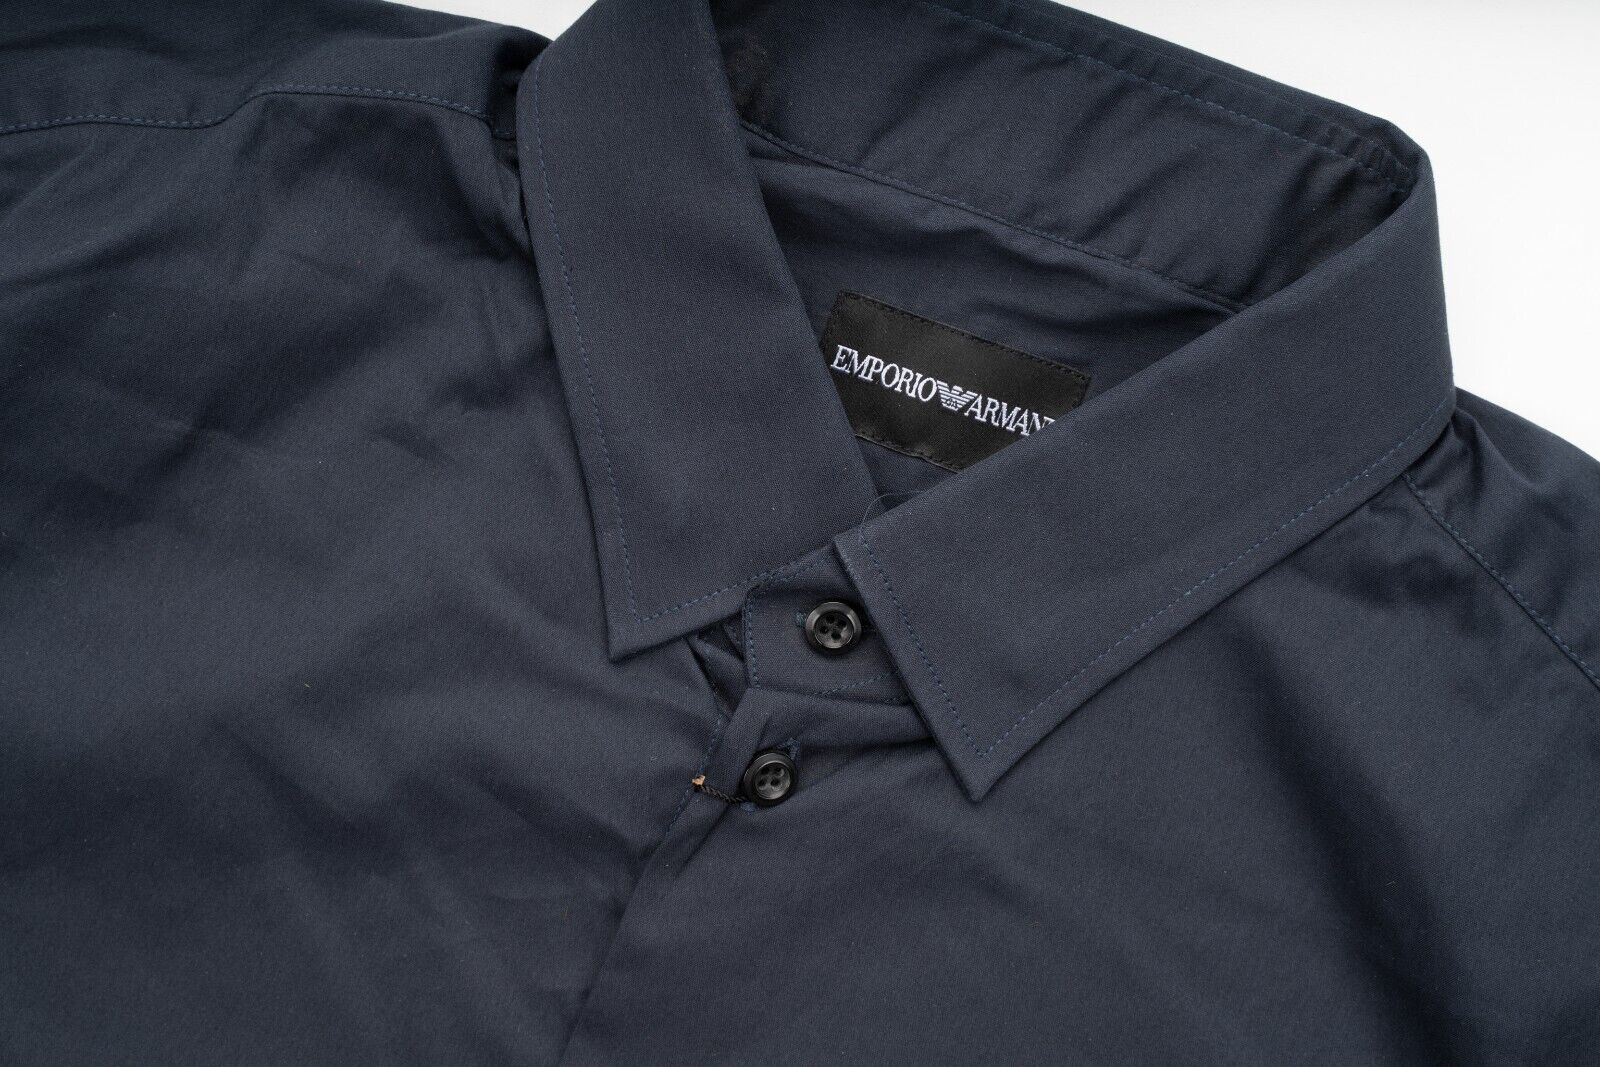 EMPORIO ARMANI Navy Blue Cotton Dress Shirt Short Sleeve Slim Fit 15 1/2 39 Emporio Armani